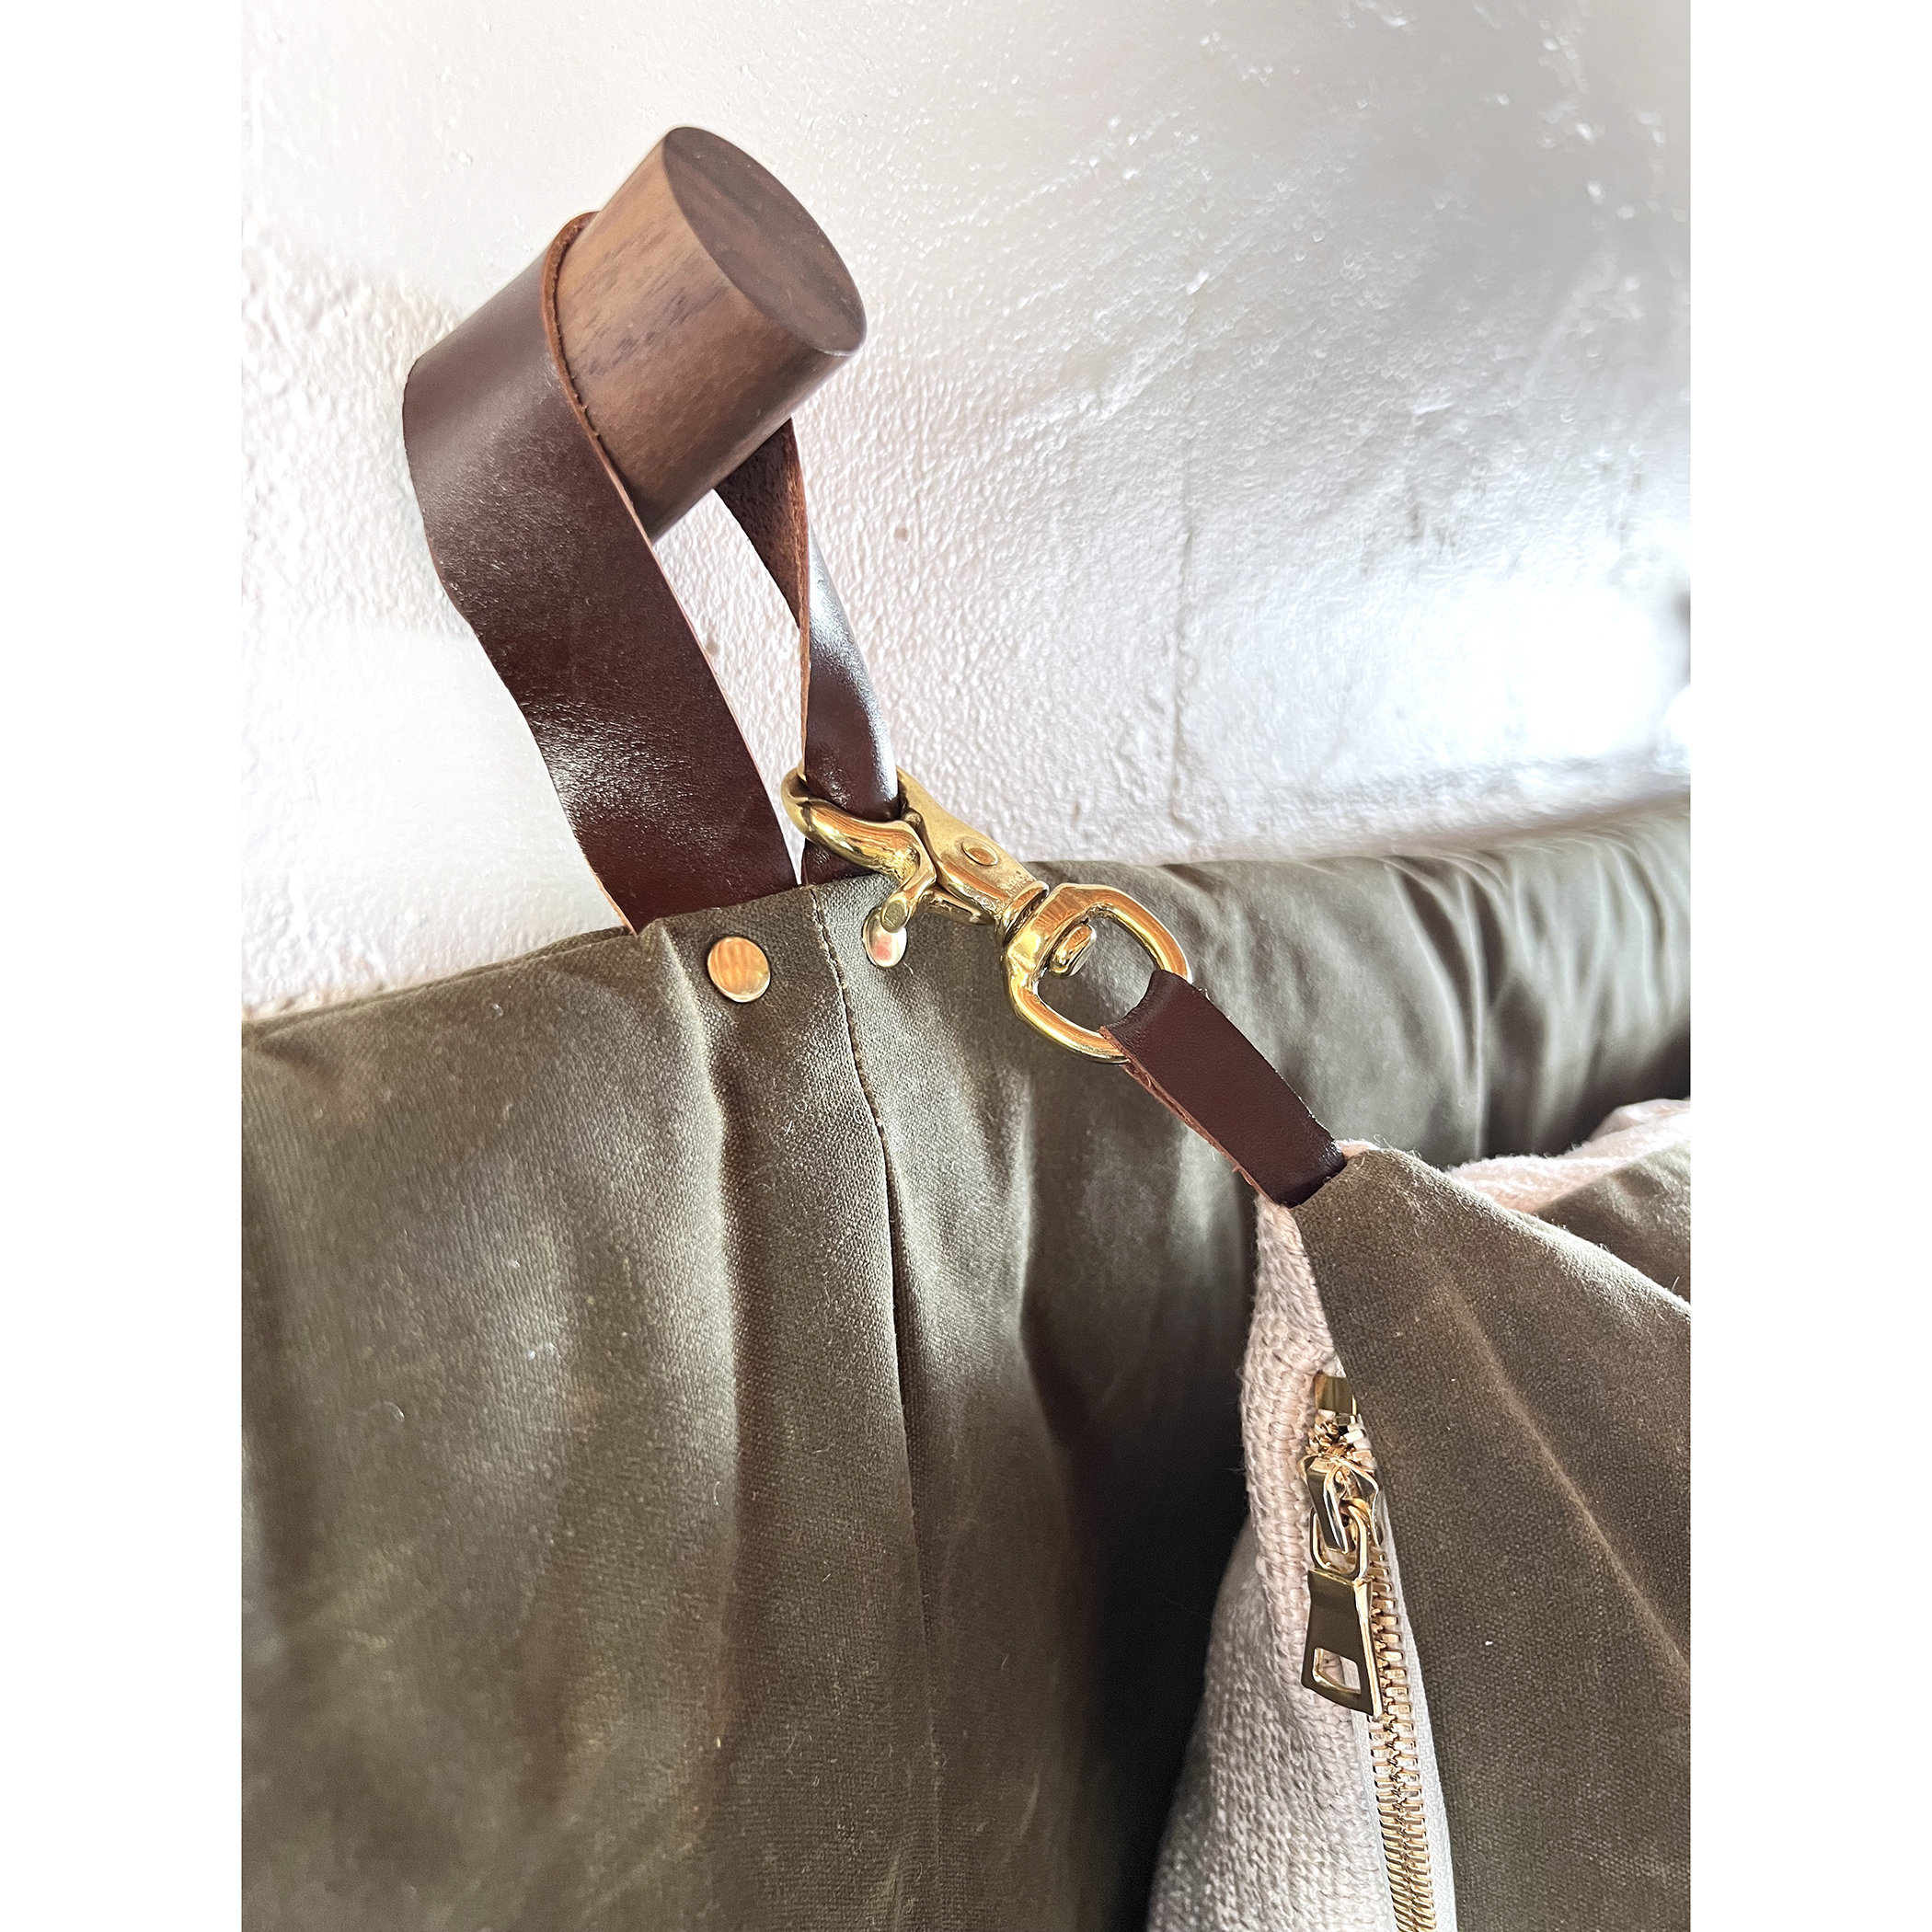 Stone Mountain Leather Crossbody Bags Polyurethane Lined Interior Wristlet  Strap (Cognac/Black Horizontal)